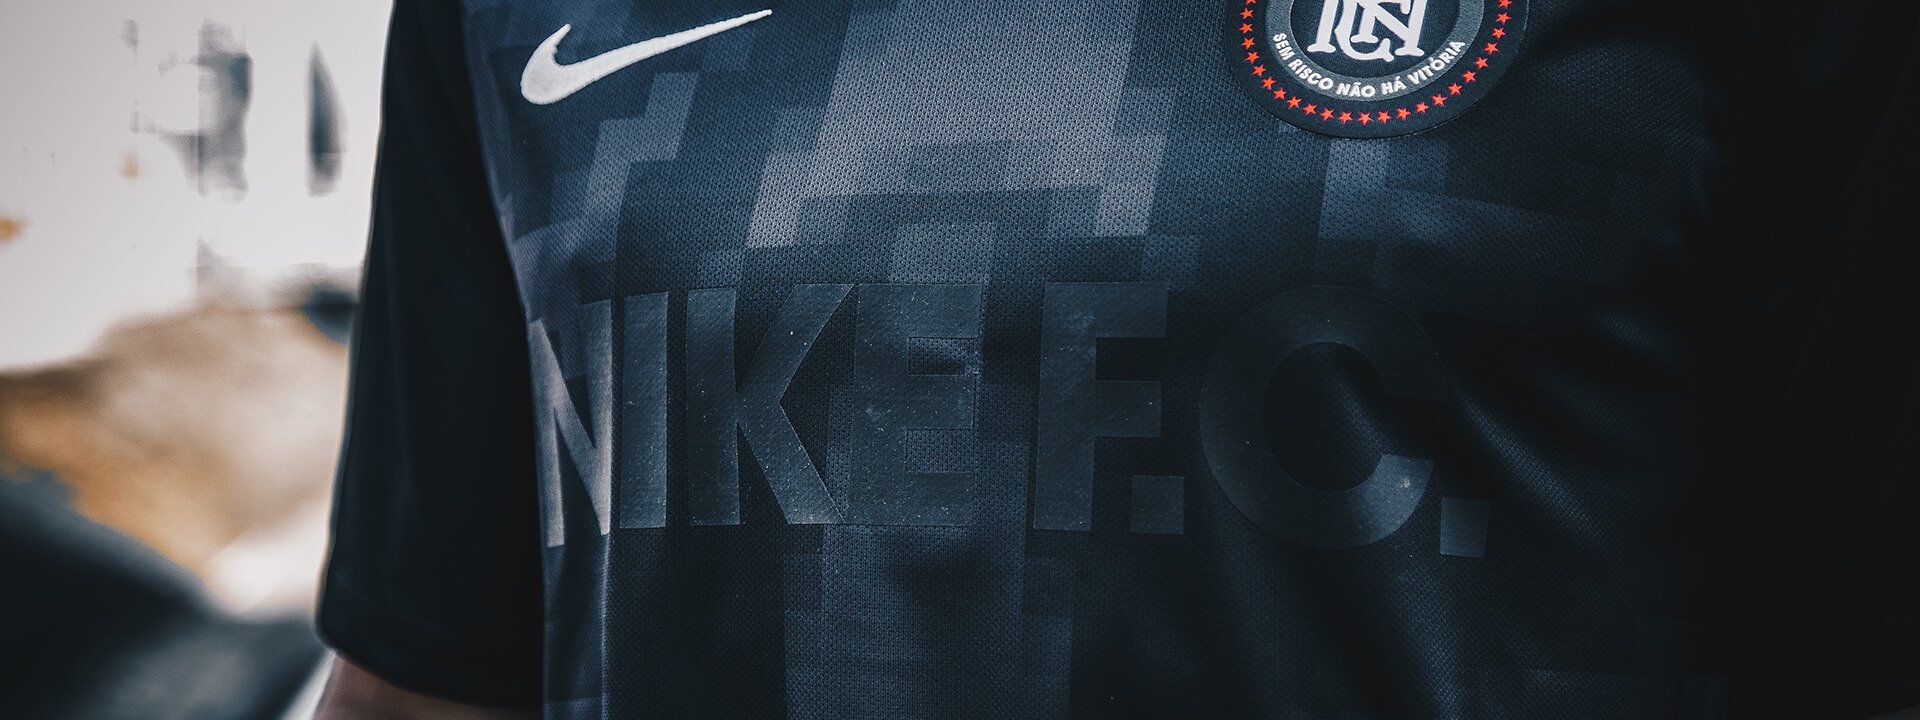 NikeFC-NEW2019-sliderheader-1920x720-foto6.jpg